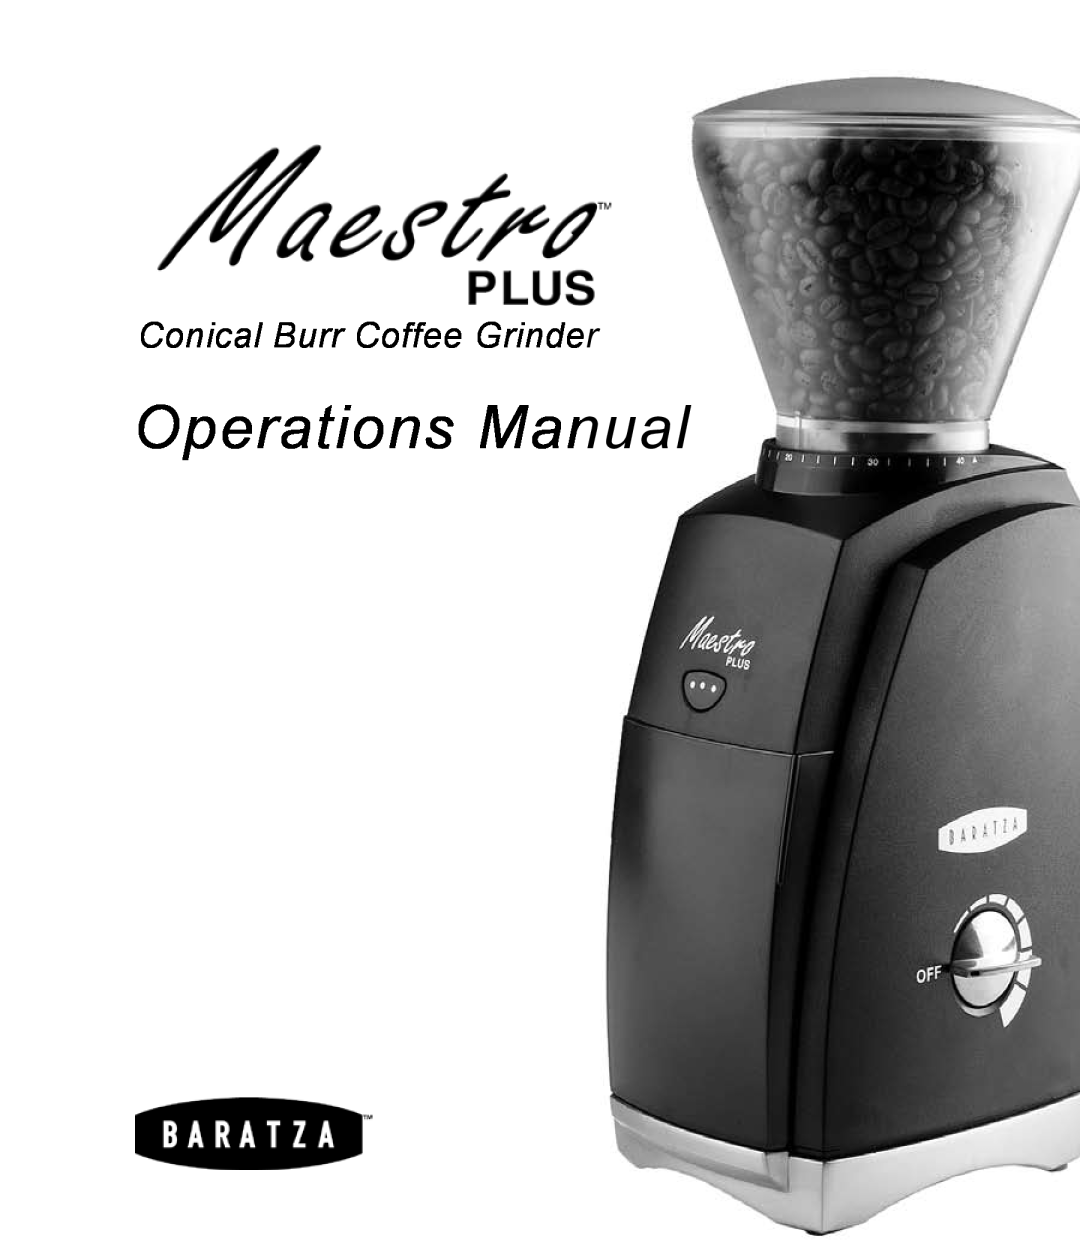 Baratza Maestro Plus manual Operations Manual, Conical Burr Coffee Grinder 